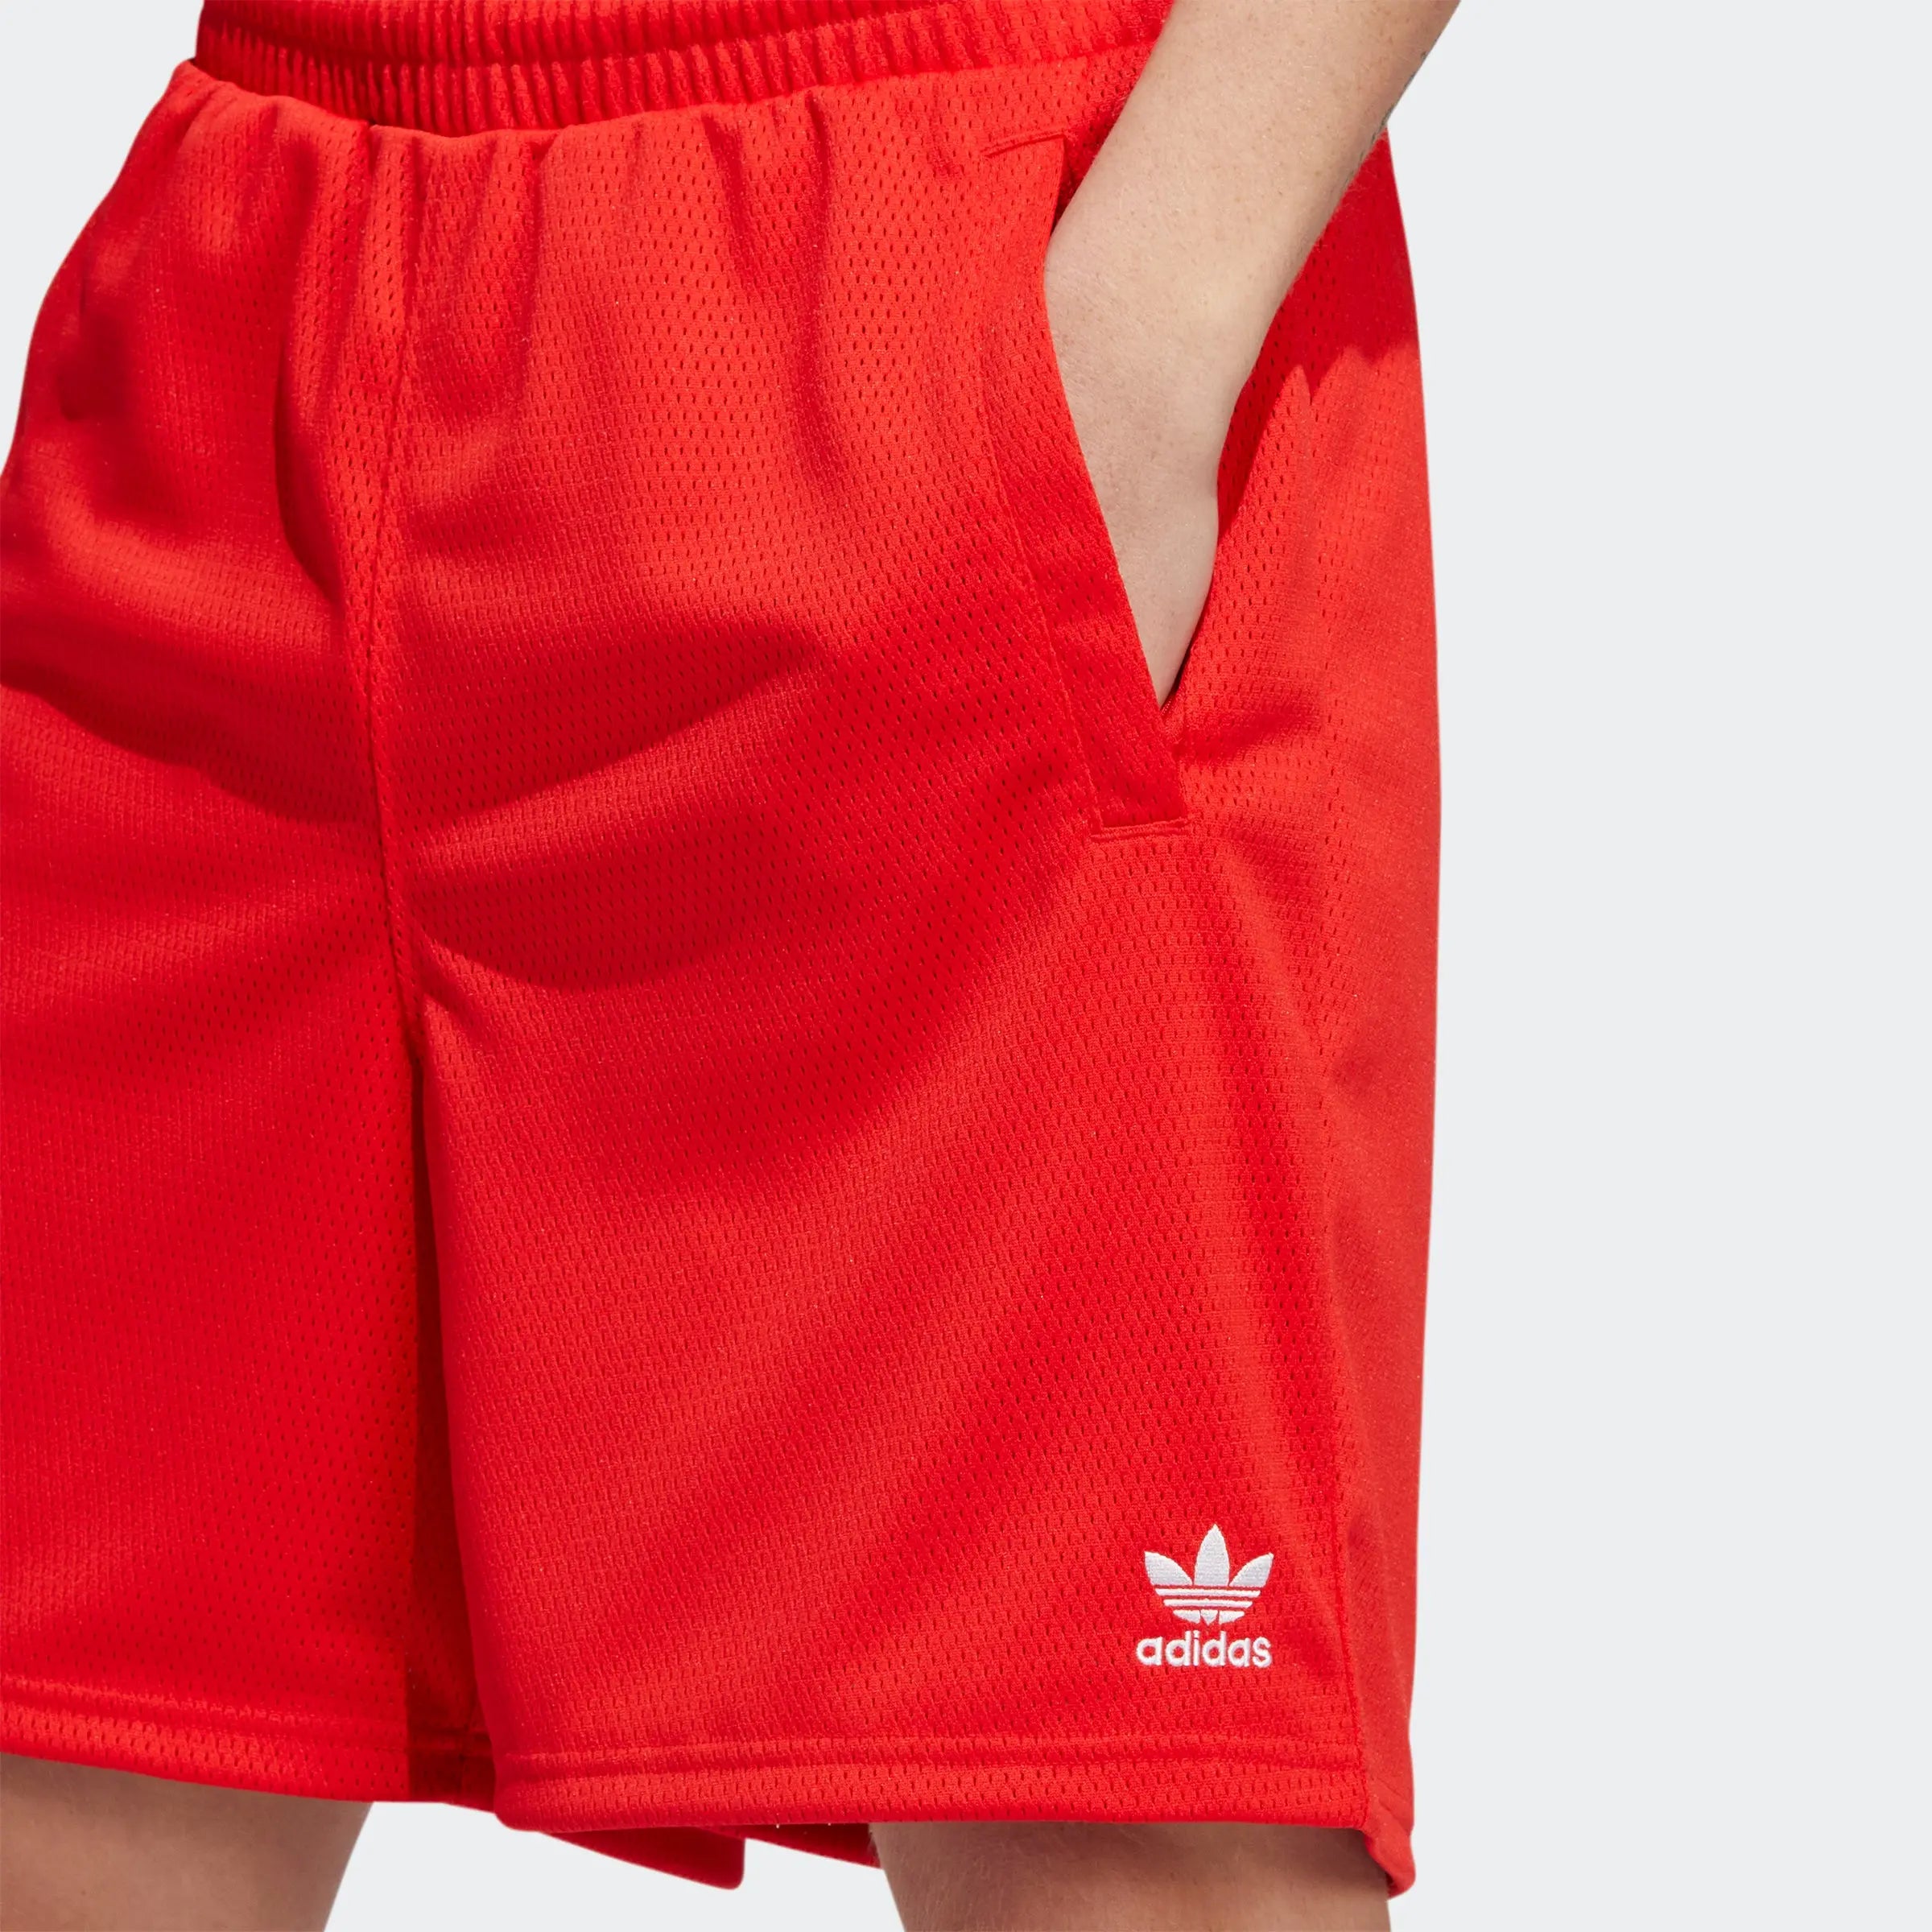 Essential Reds Mesh Adidas Short Red Puffer -